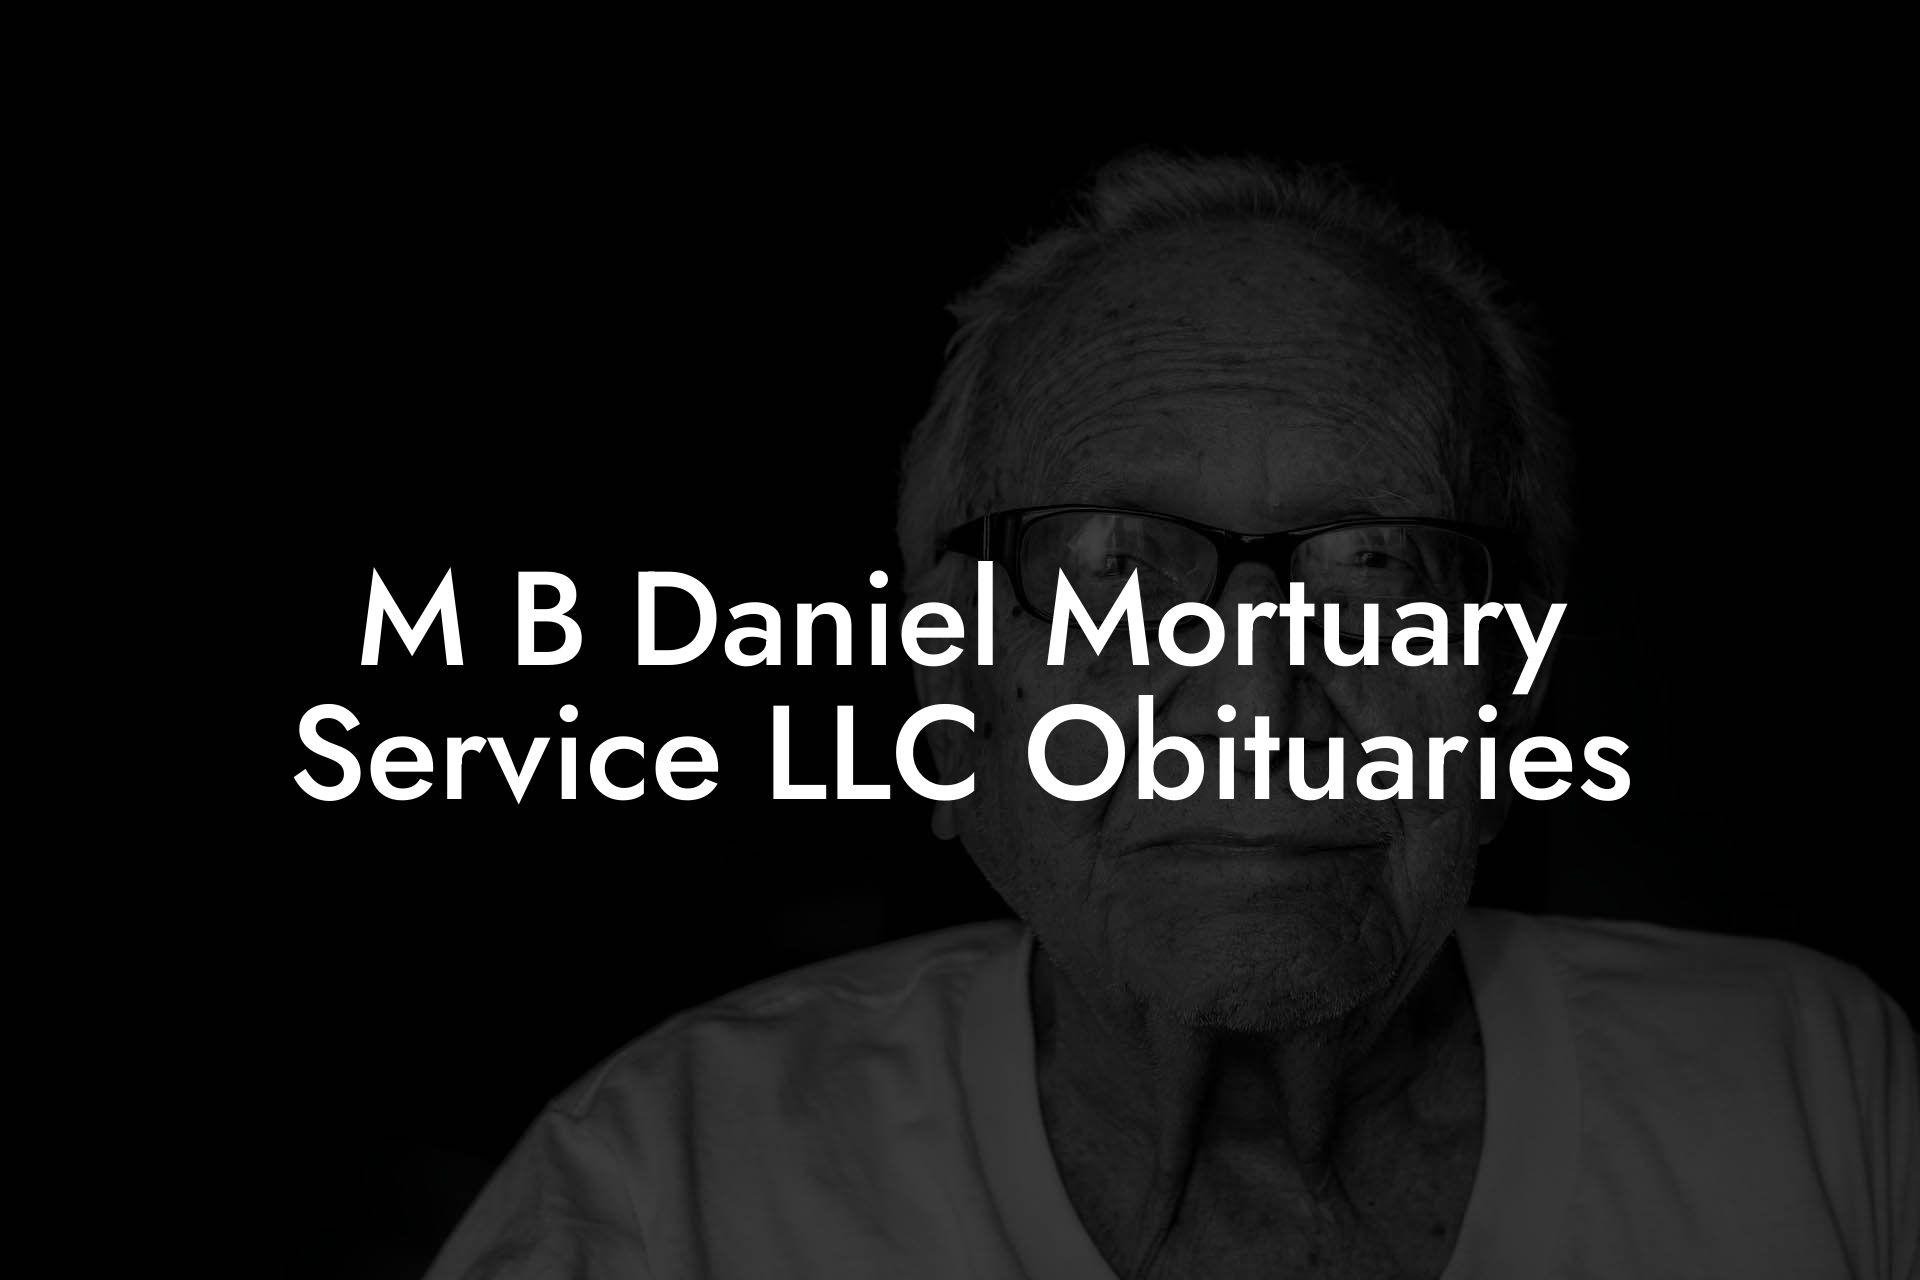 M B Daniel Mortuary Service LLC Obituaries